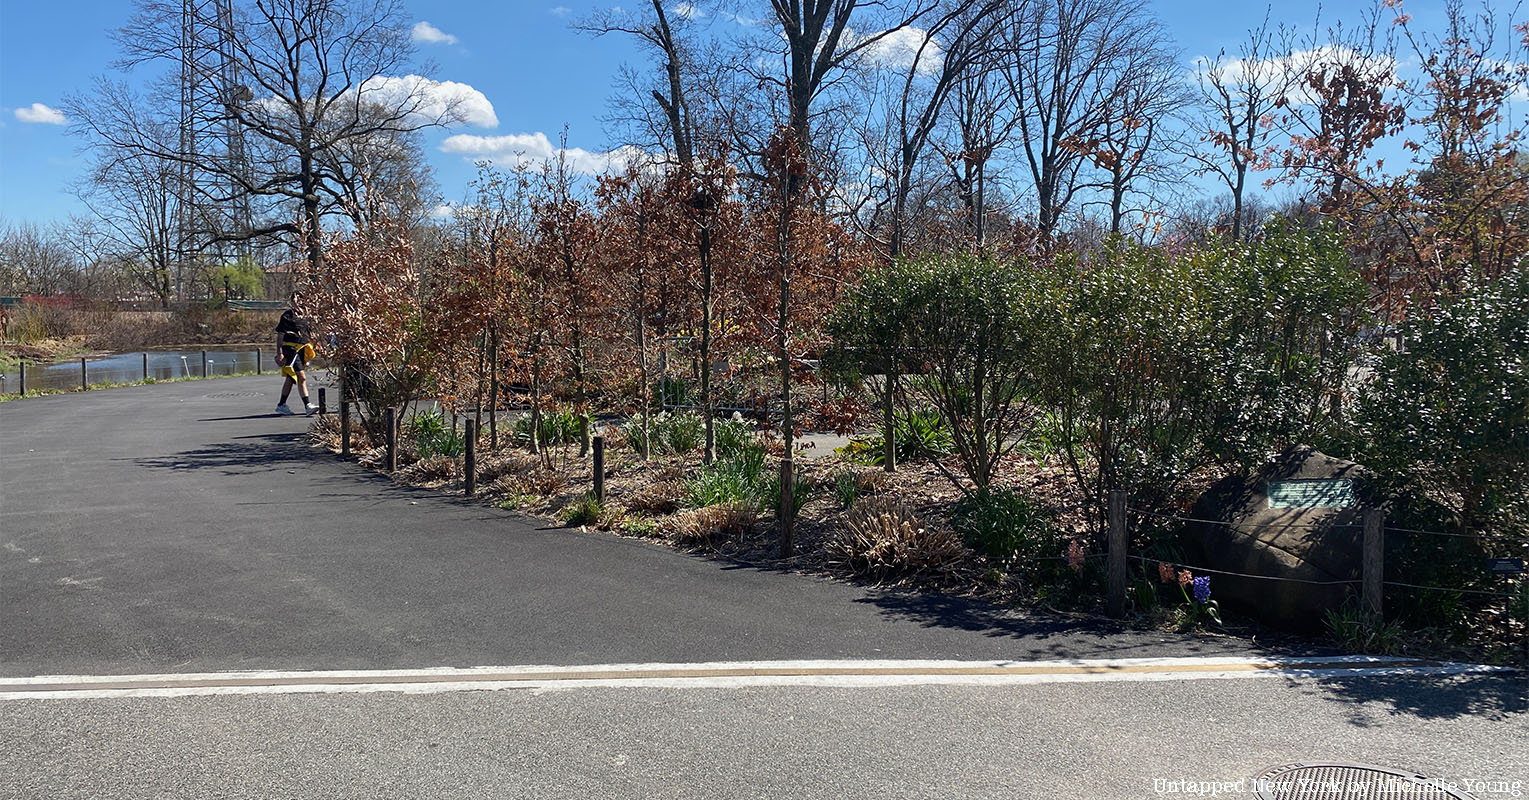 Brooklyn Flatbush border line in Brooklyn Botanic Garden